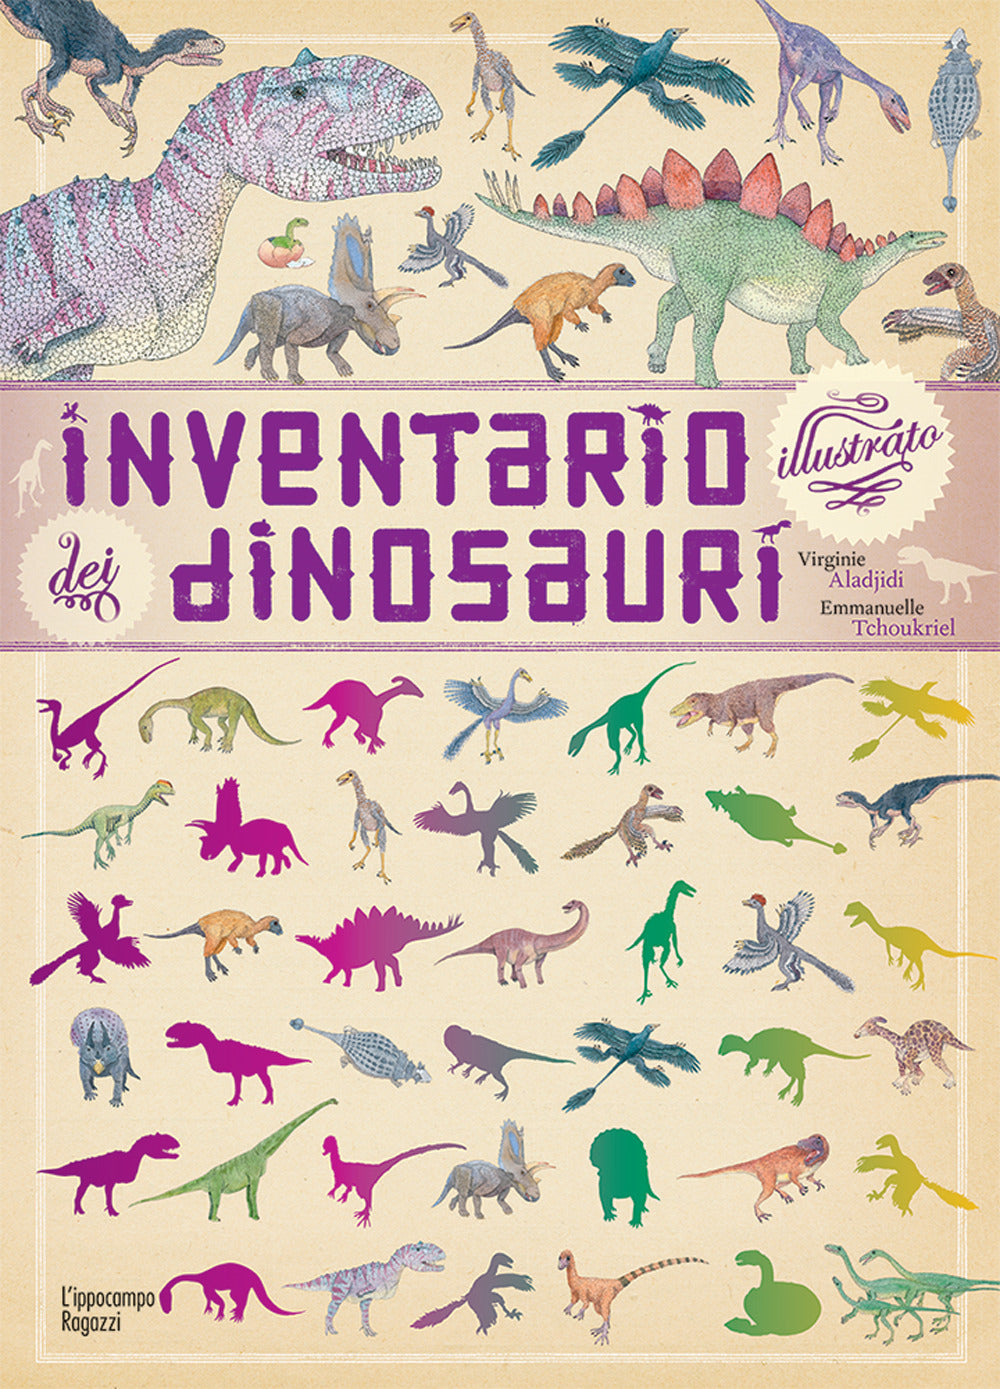 Inventario illustrato dei dinosauri.